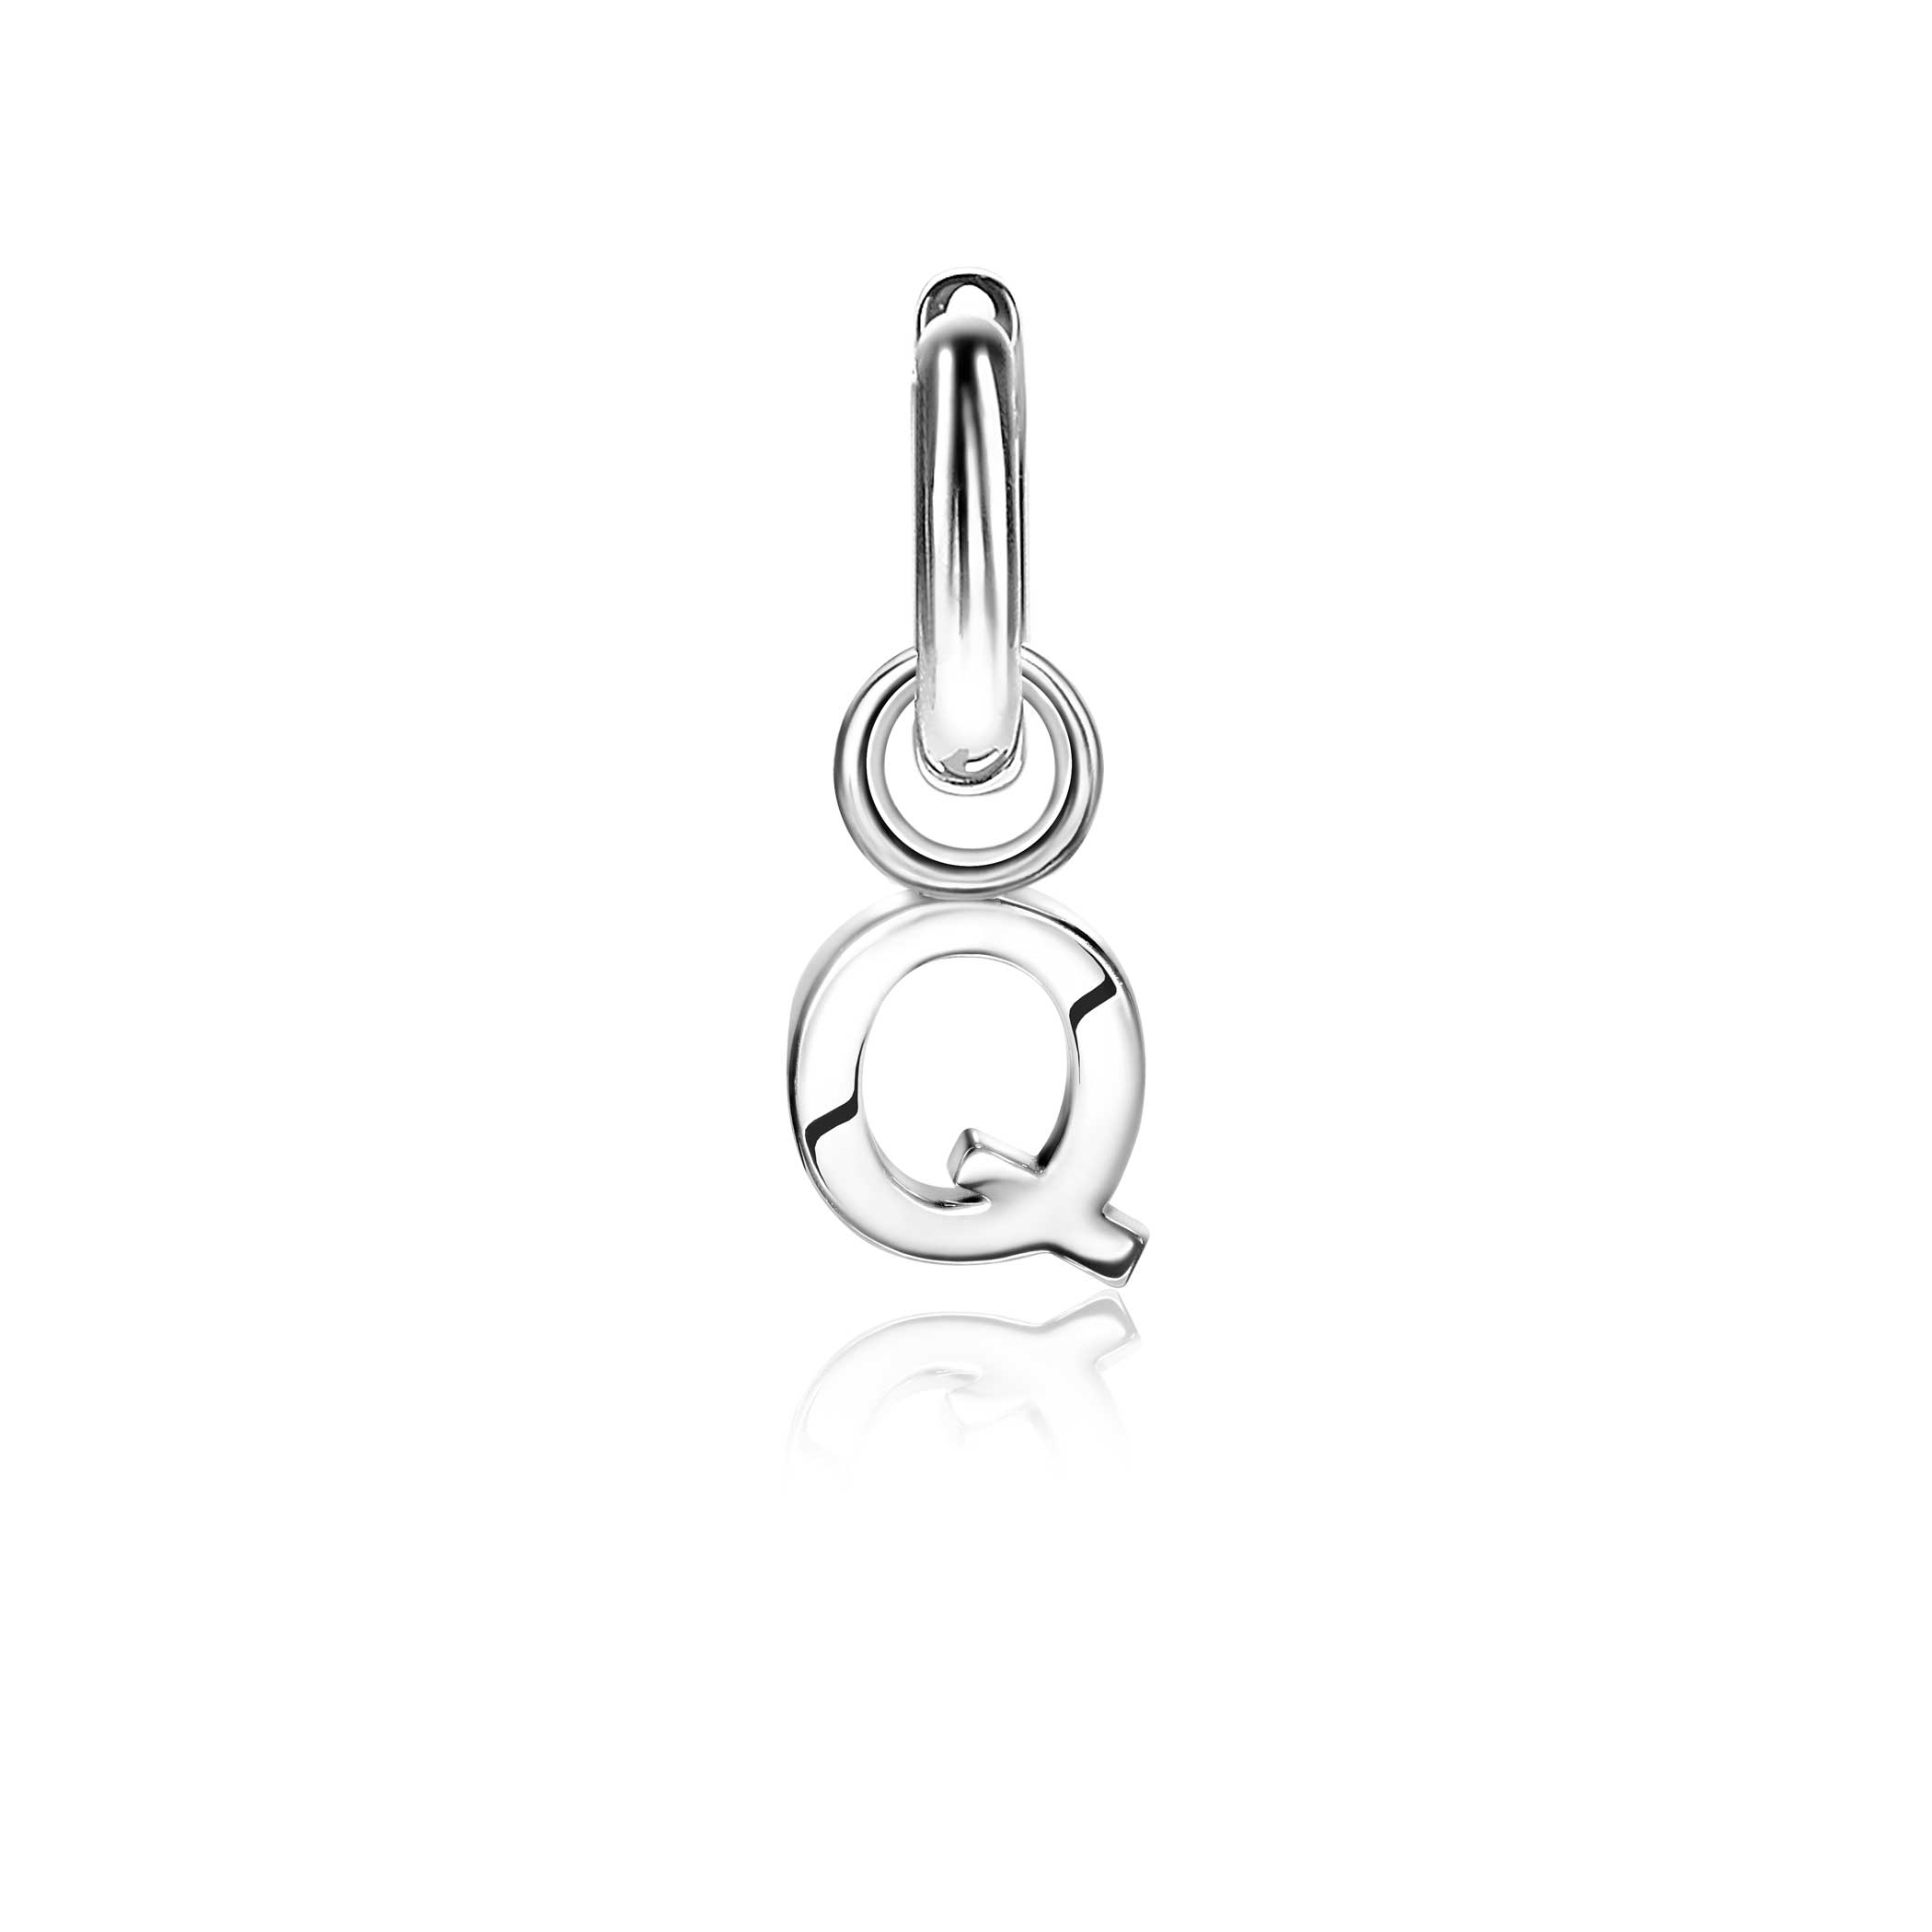 ZINZI Sterling Silver Letter Earrings Pendant Q price per piece ZICH2144Q (excl. hoop earrings)